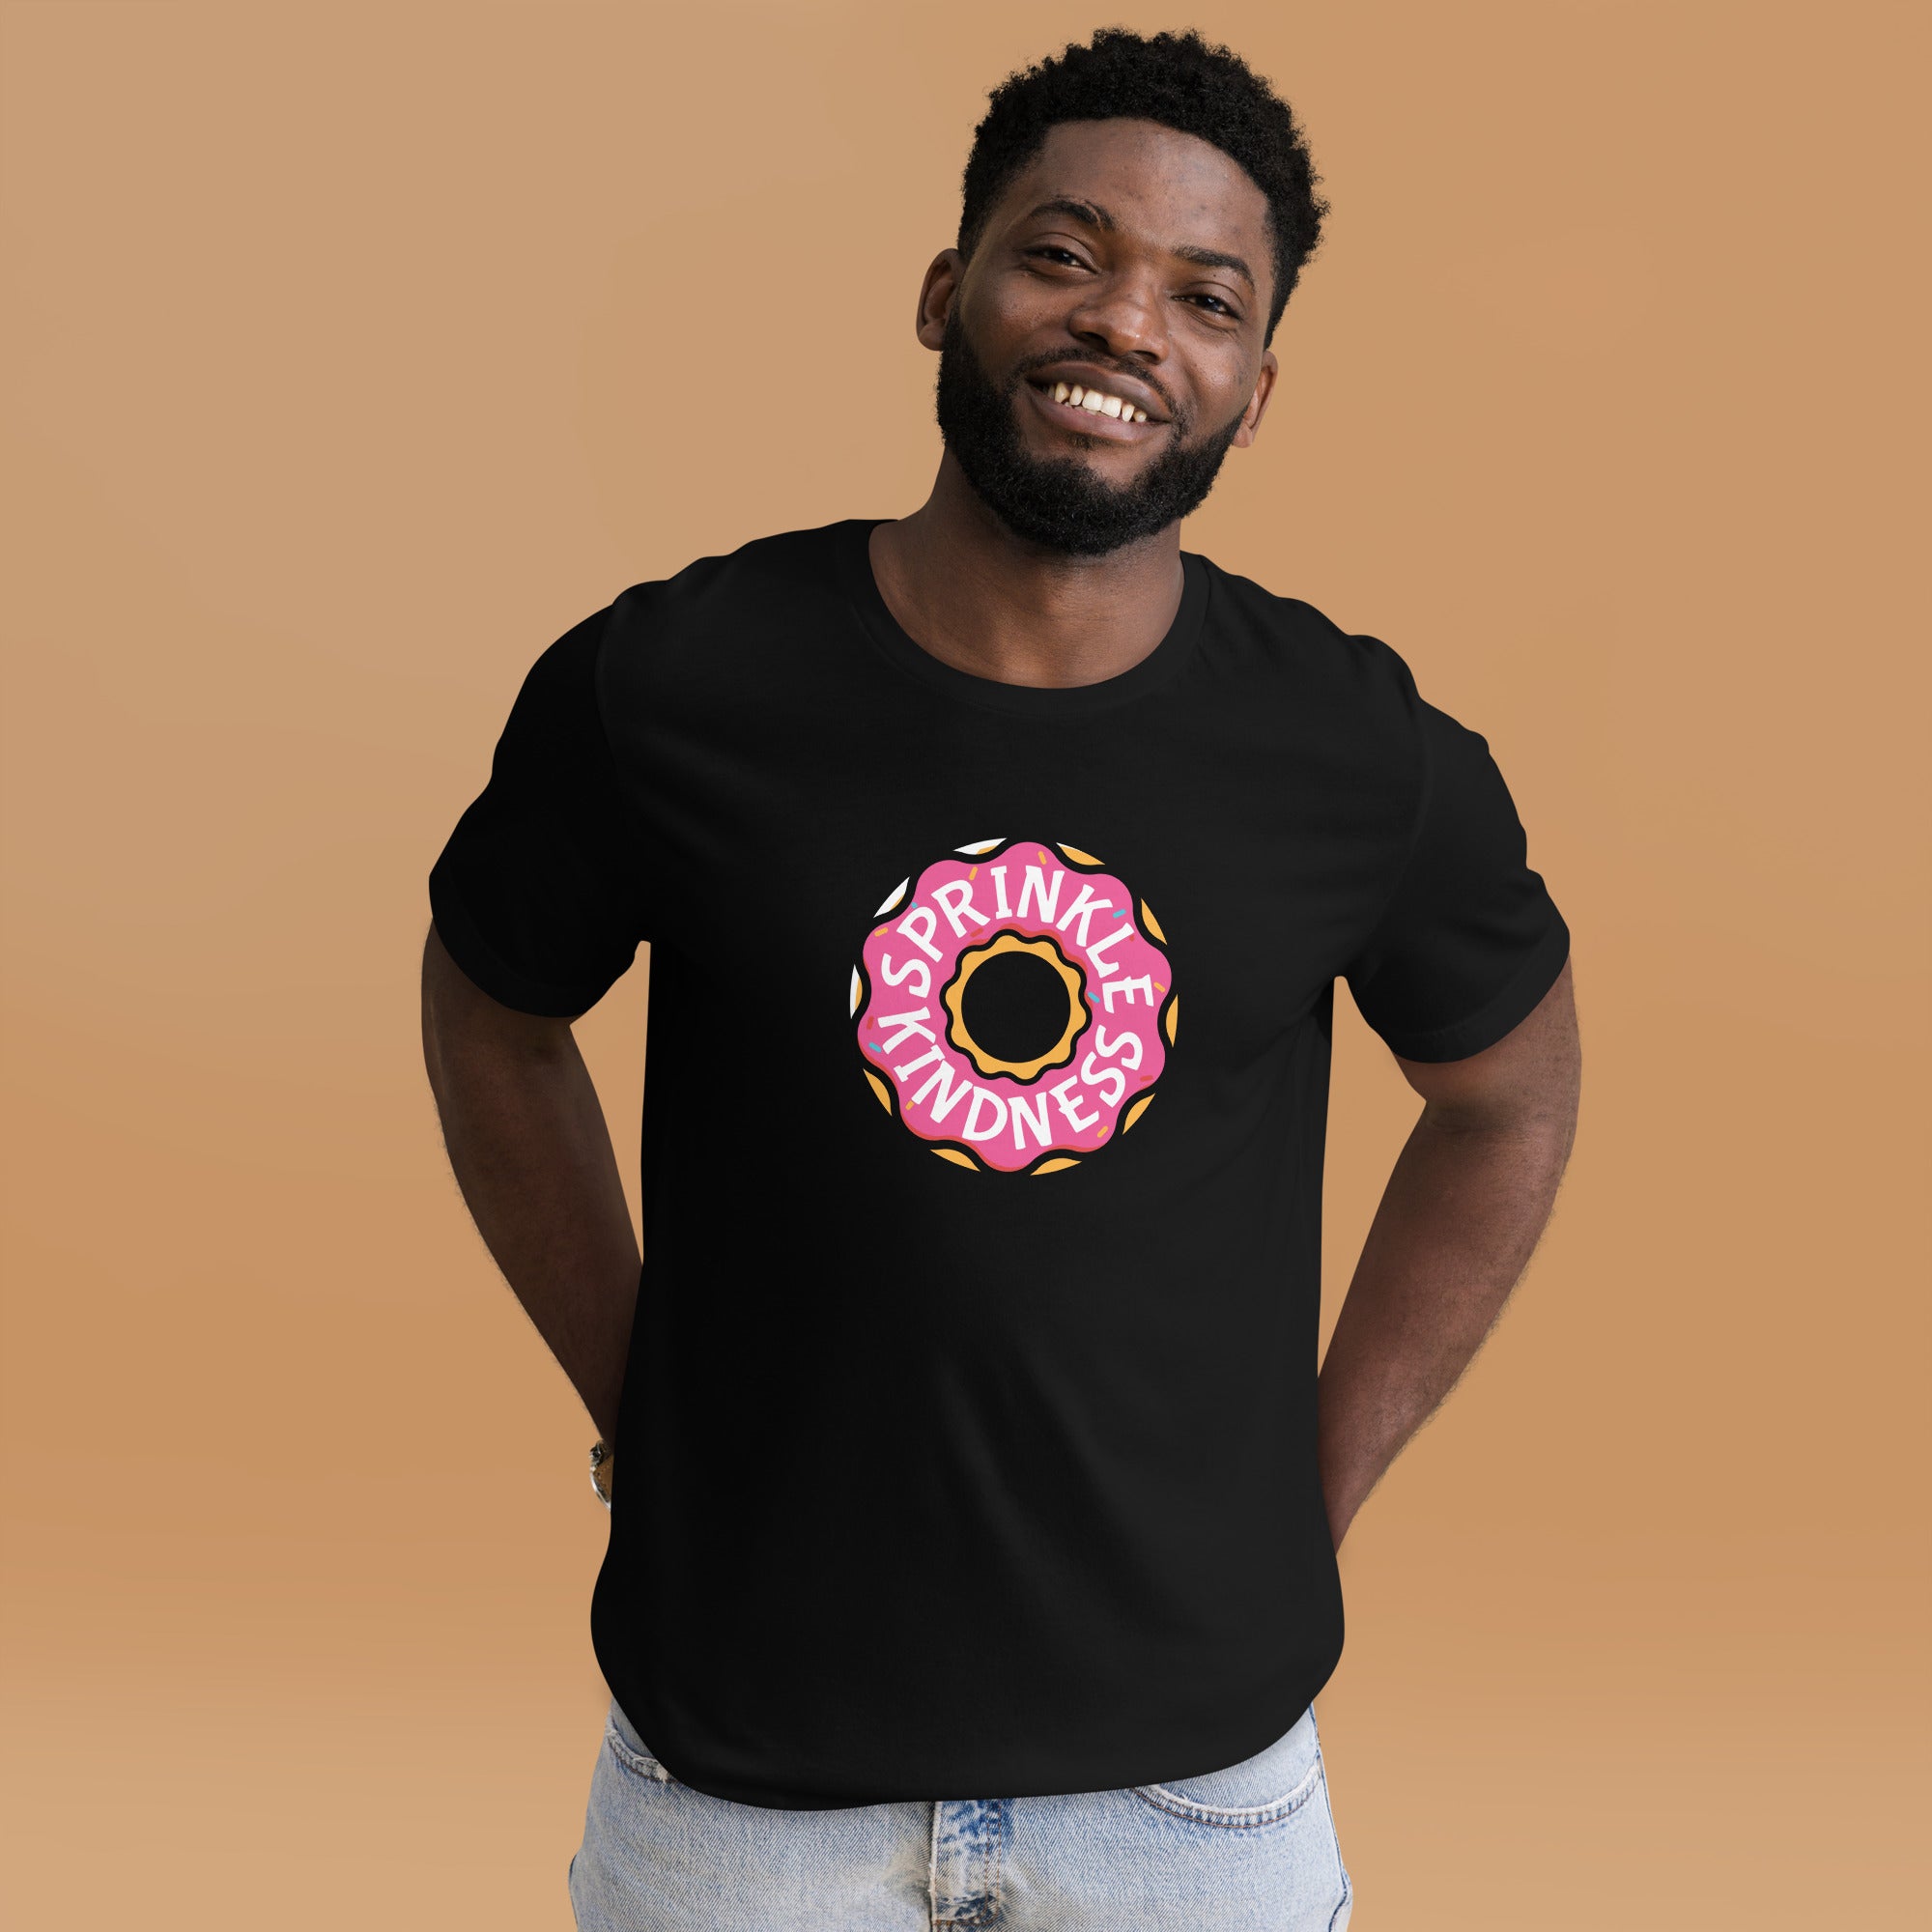 Sprinkle Kindness Donut Unisex t-shirt